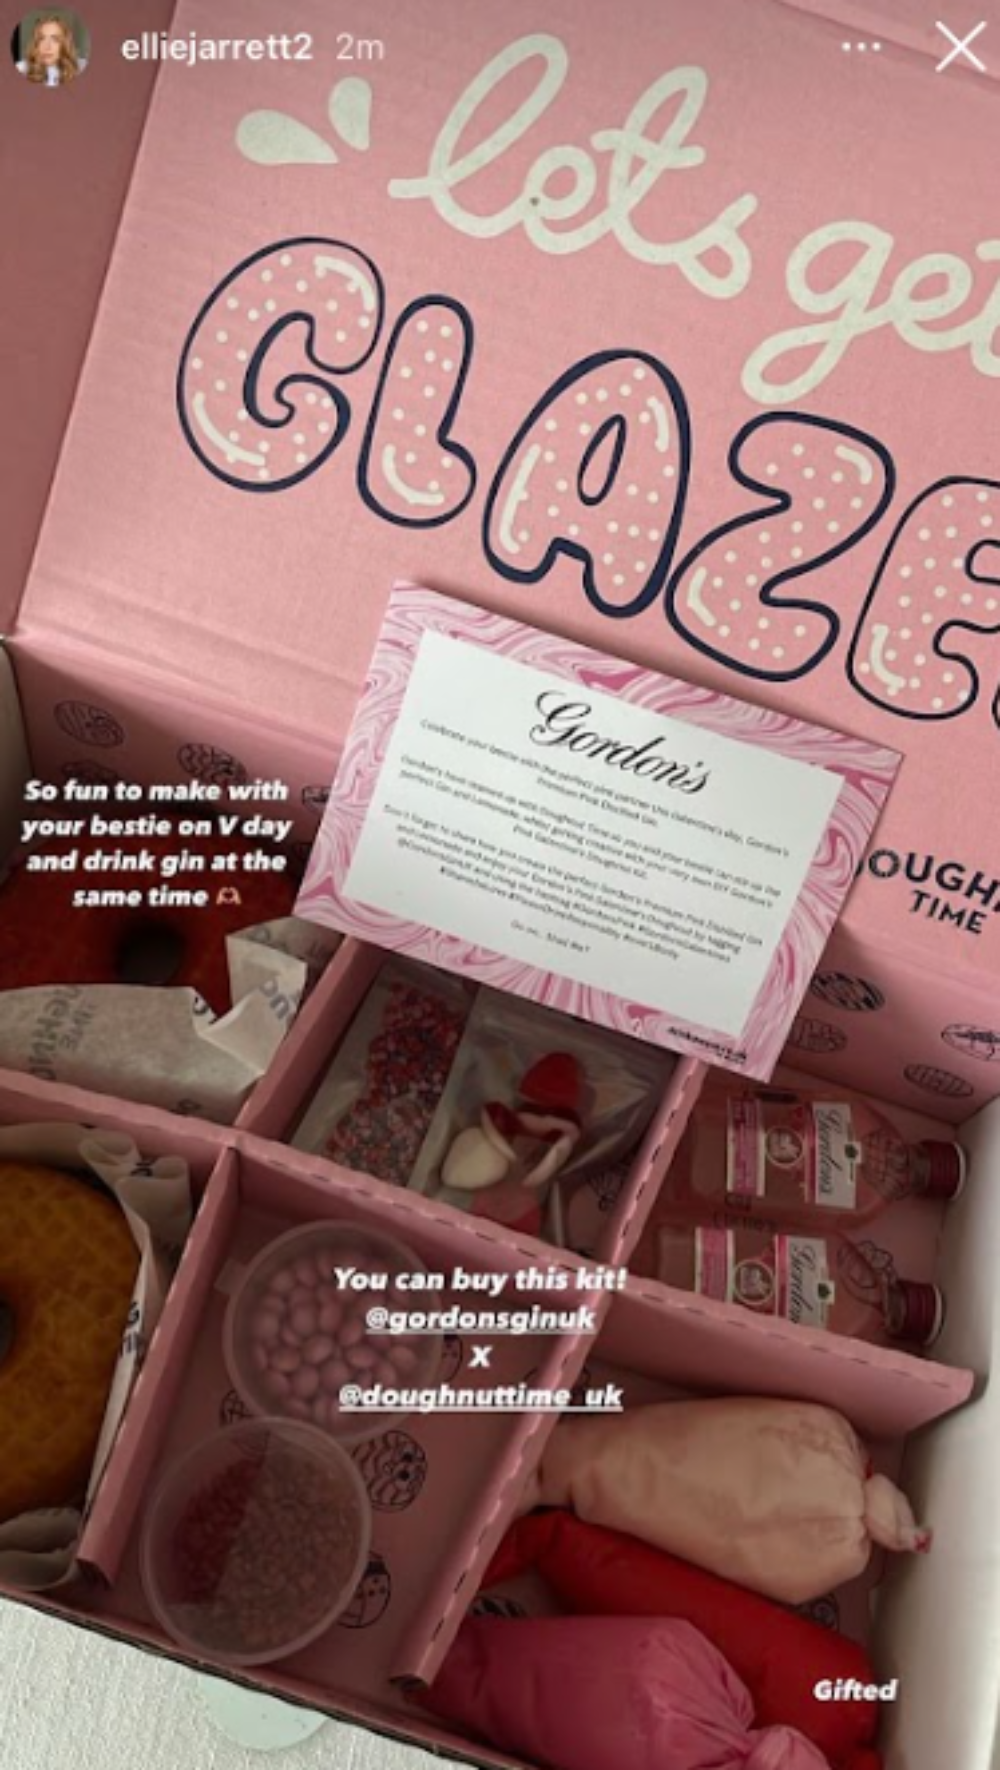 Gordon's Pink Gin - Doughnut Time Kit